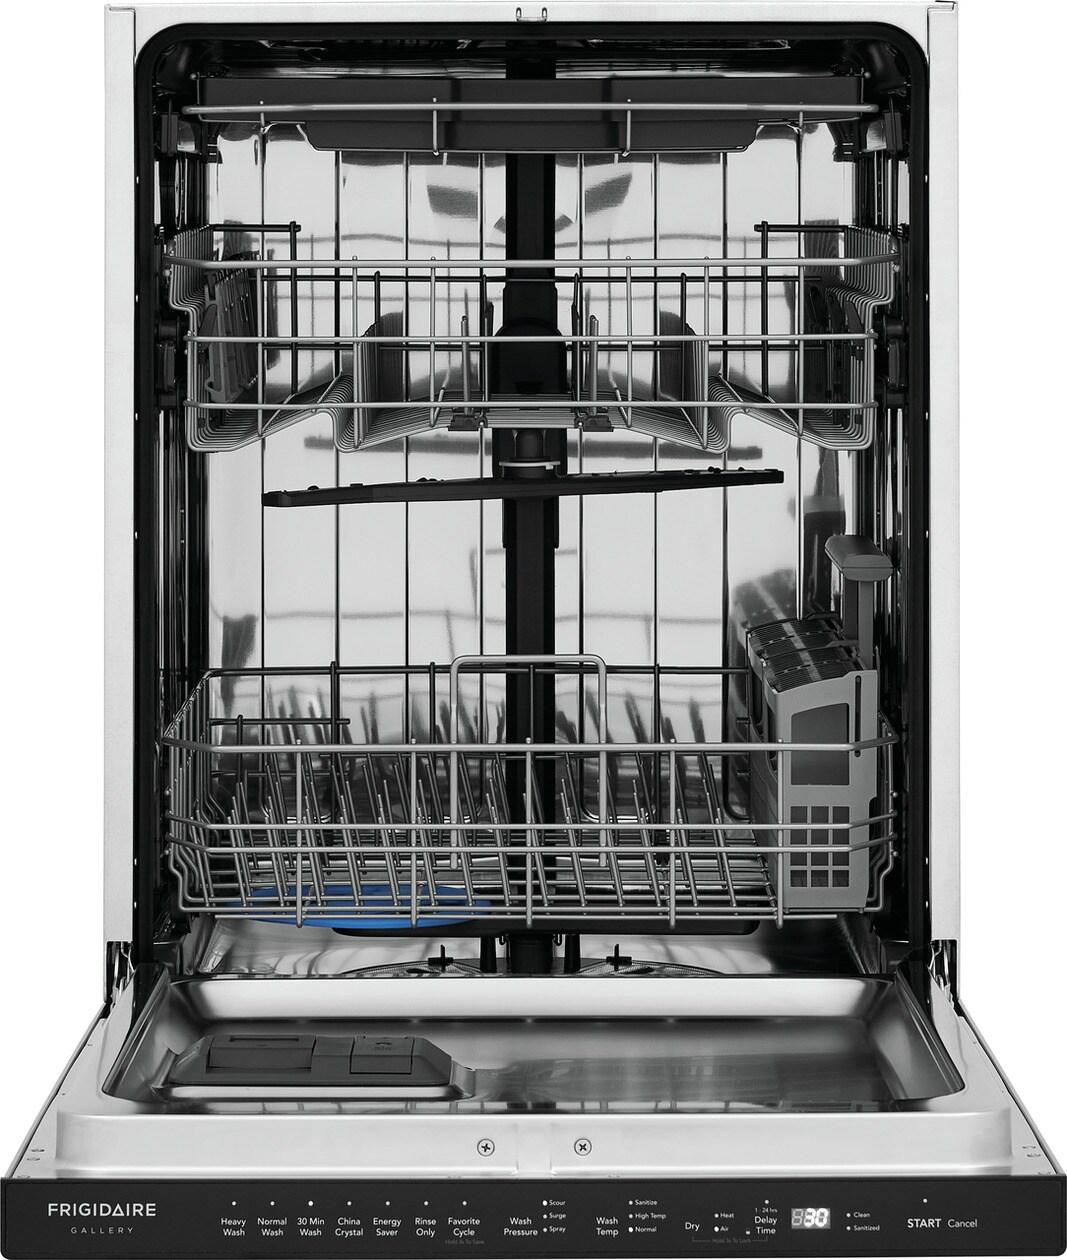 Frigidaire Gallery 24" Built-In Dishwasher